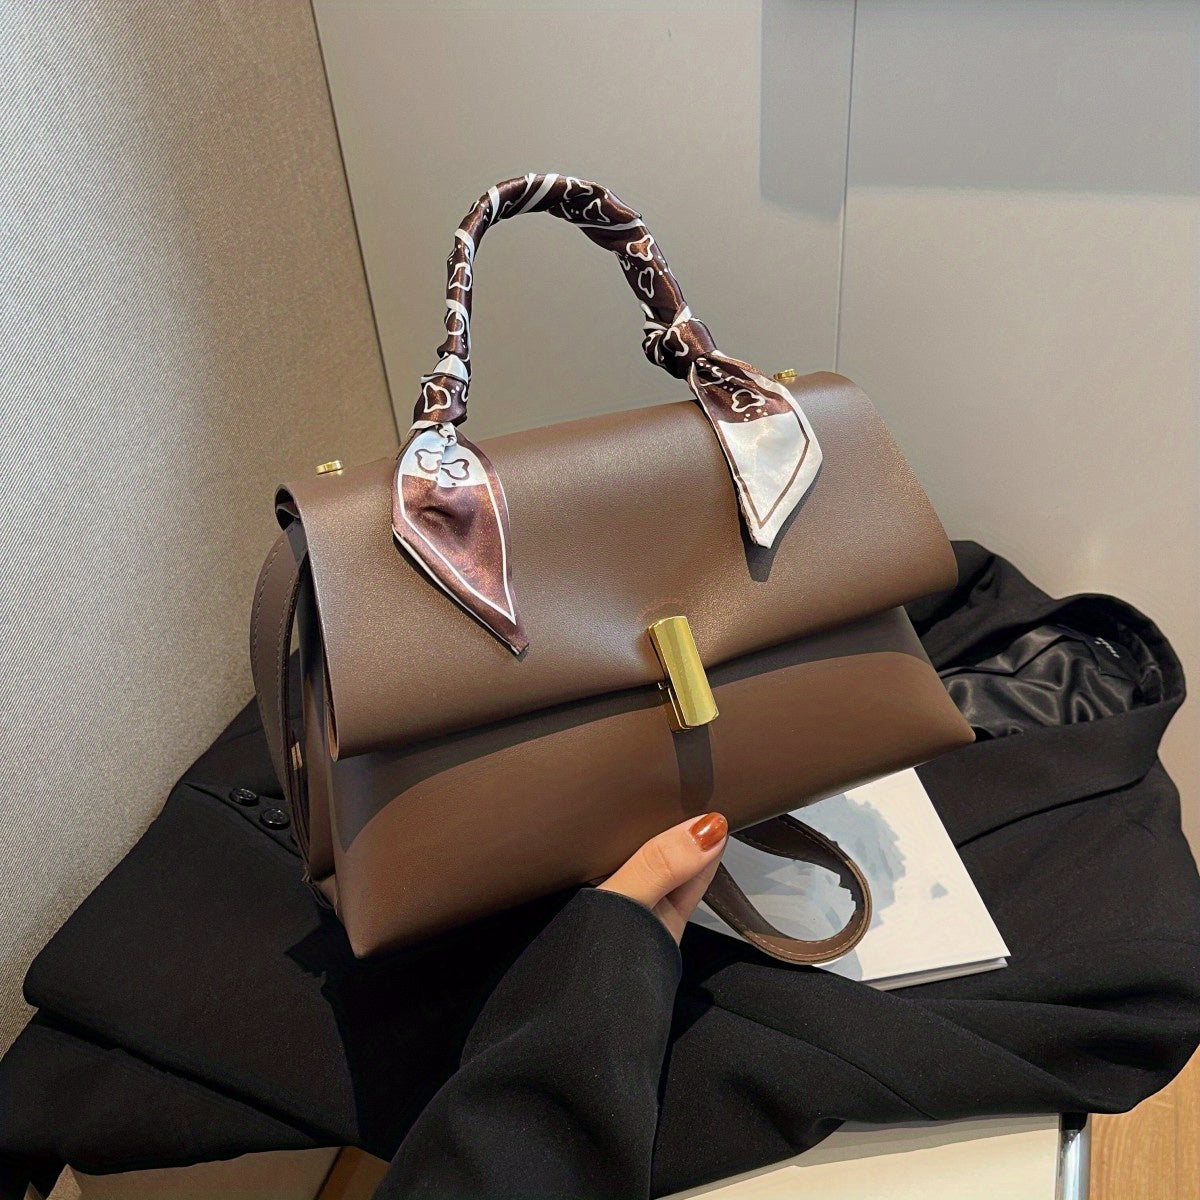 Scarf Handle  Crossbody Flap Bag, PU Leather Textured Bag Purse, Classic Versatile Fashion Shoulder Bag